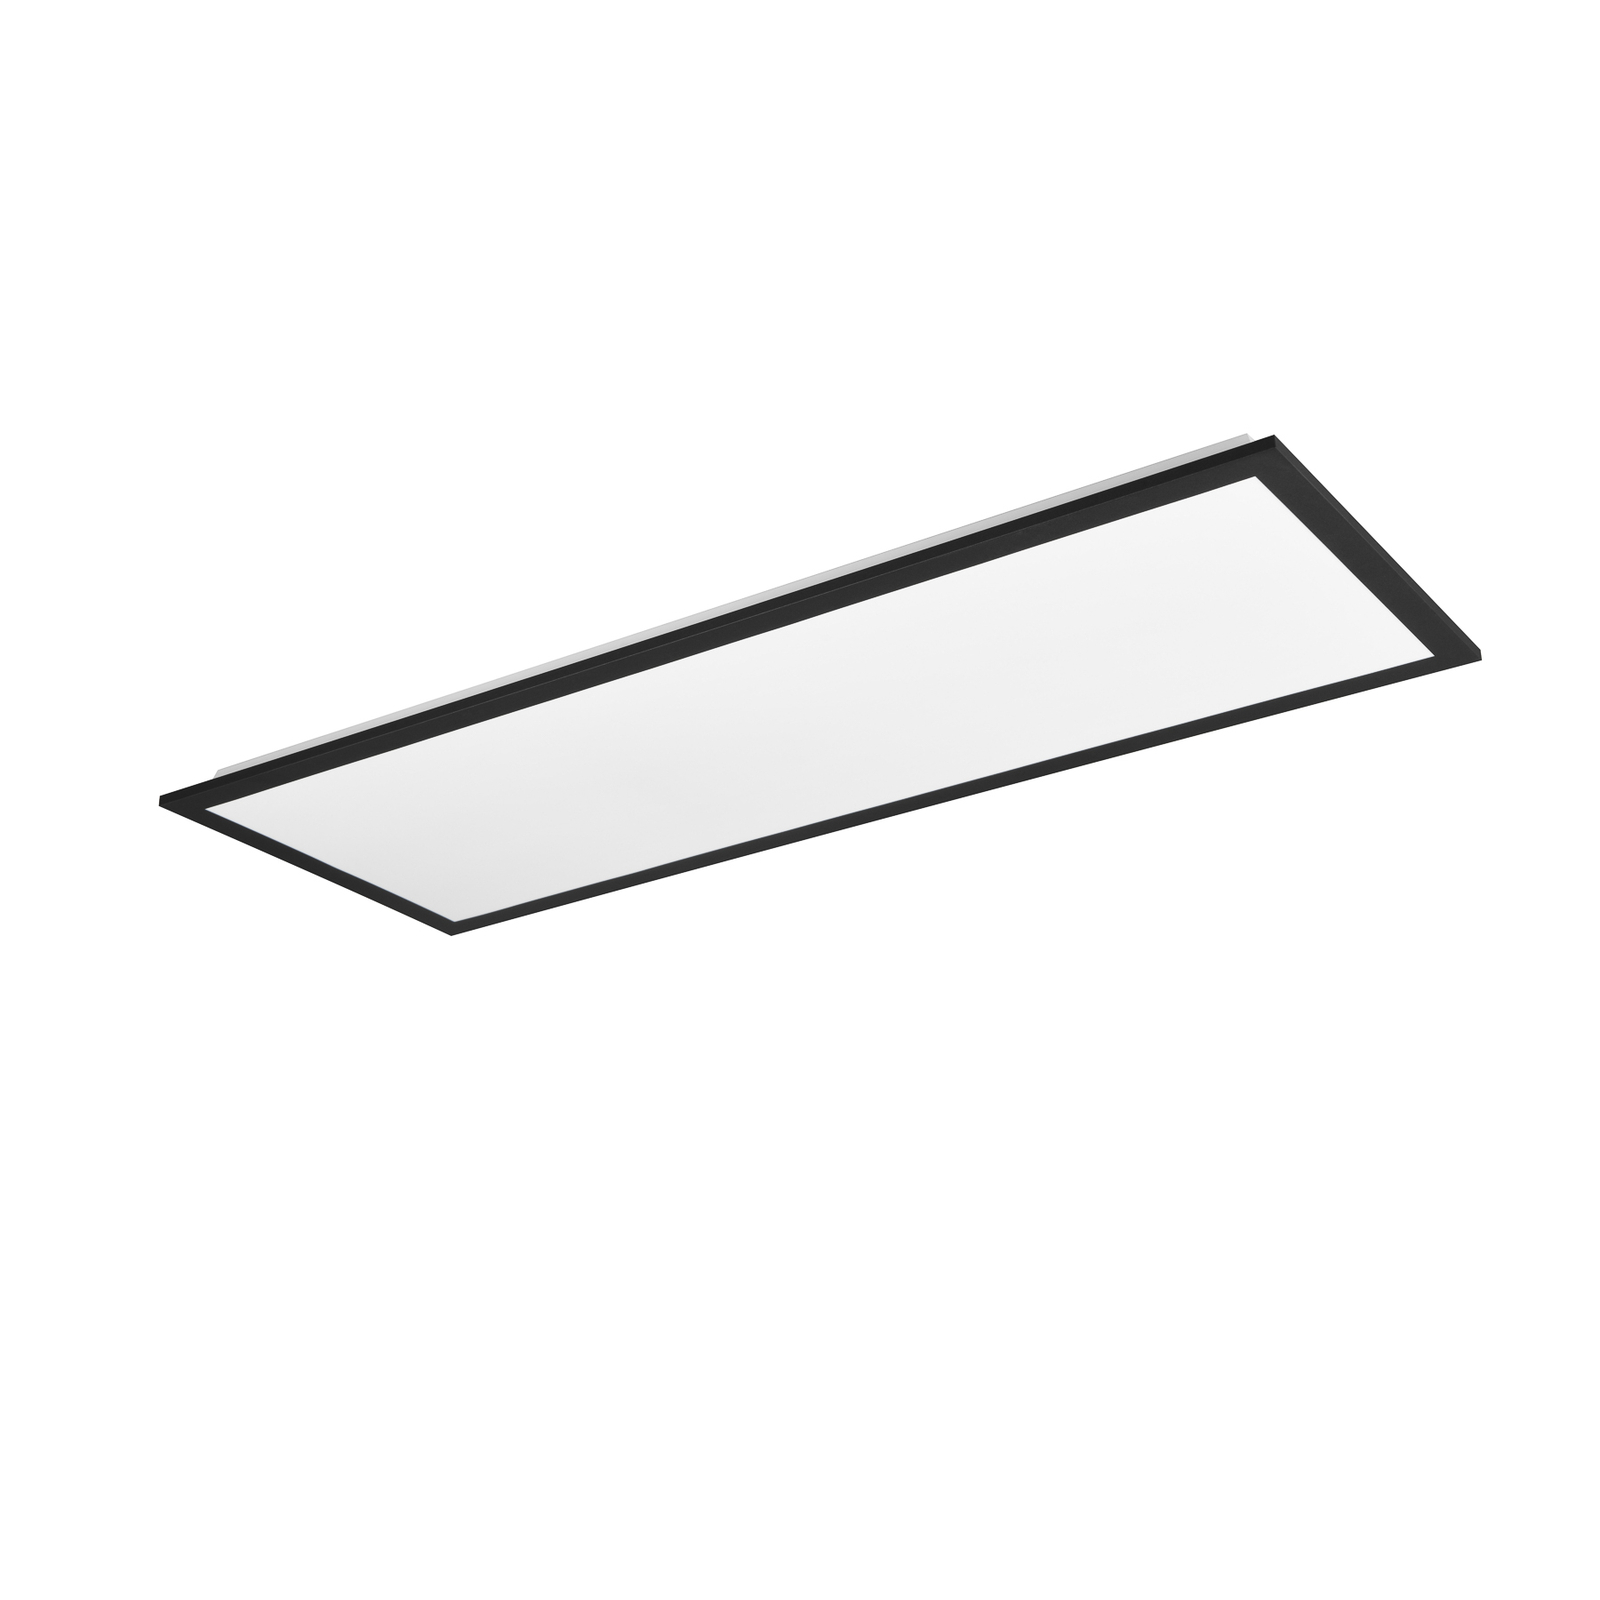 Candeeiro de teto Beta LED, comprimento 80 cm, preto, RGBW, CCT